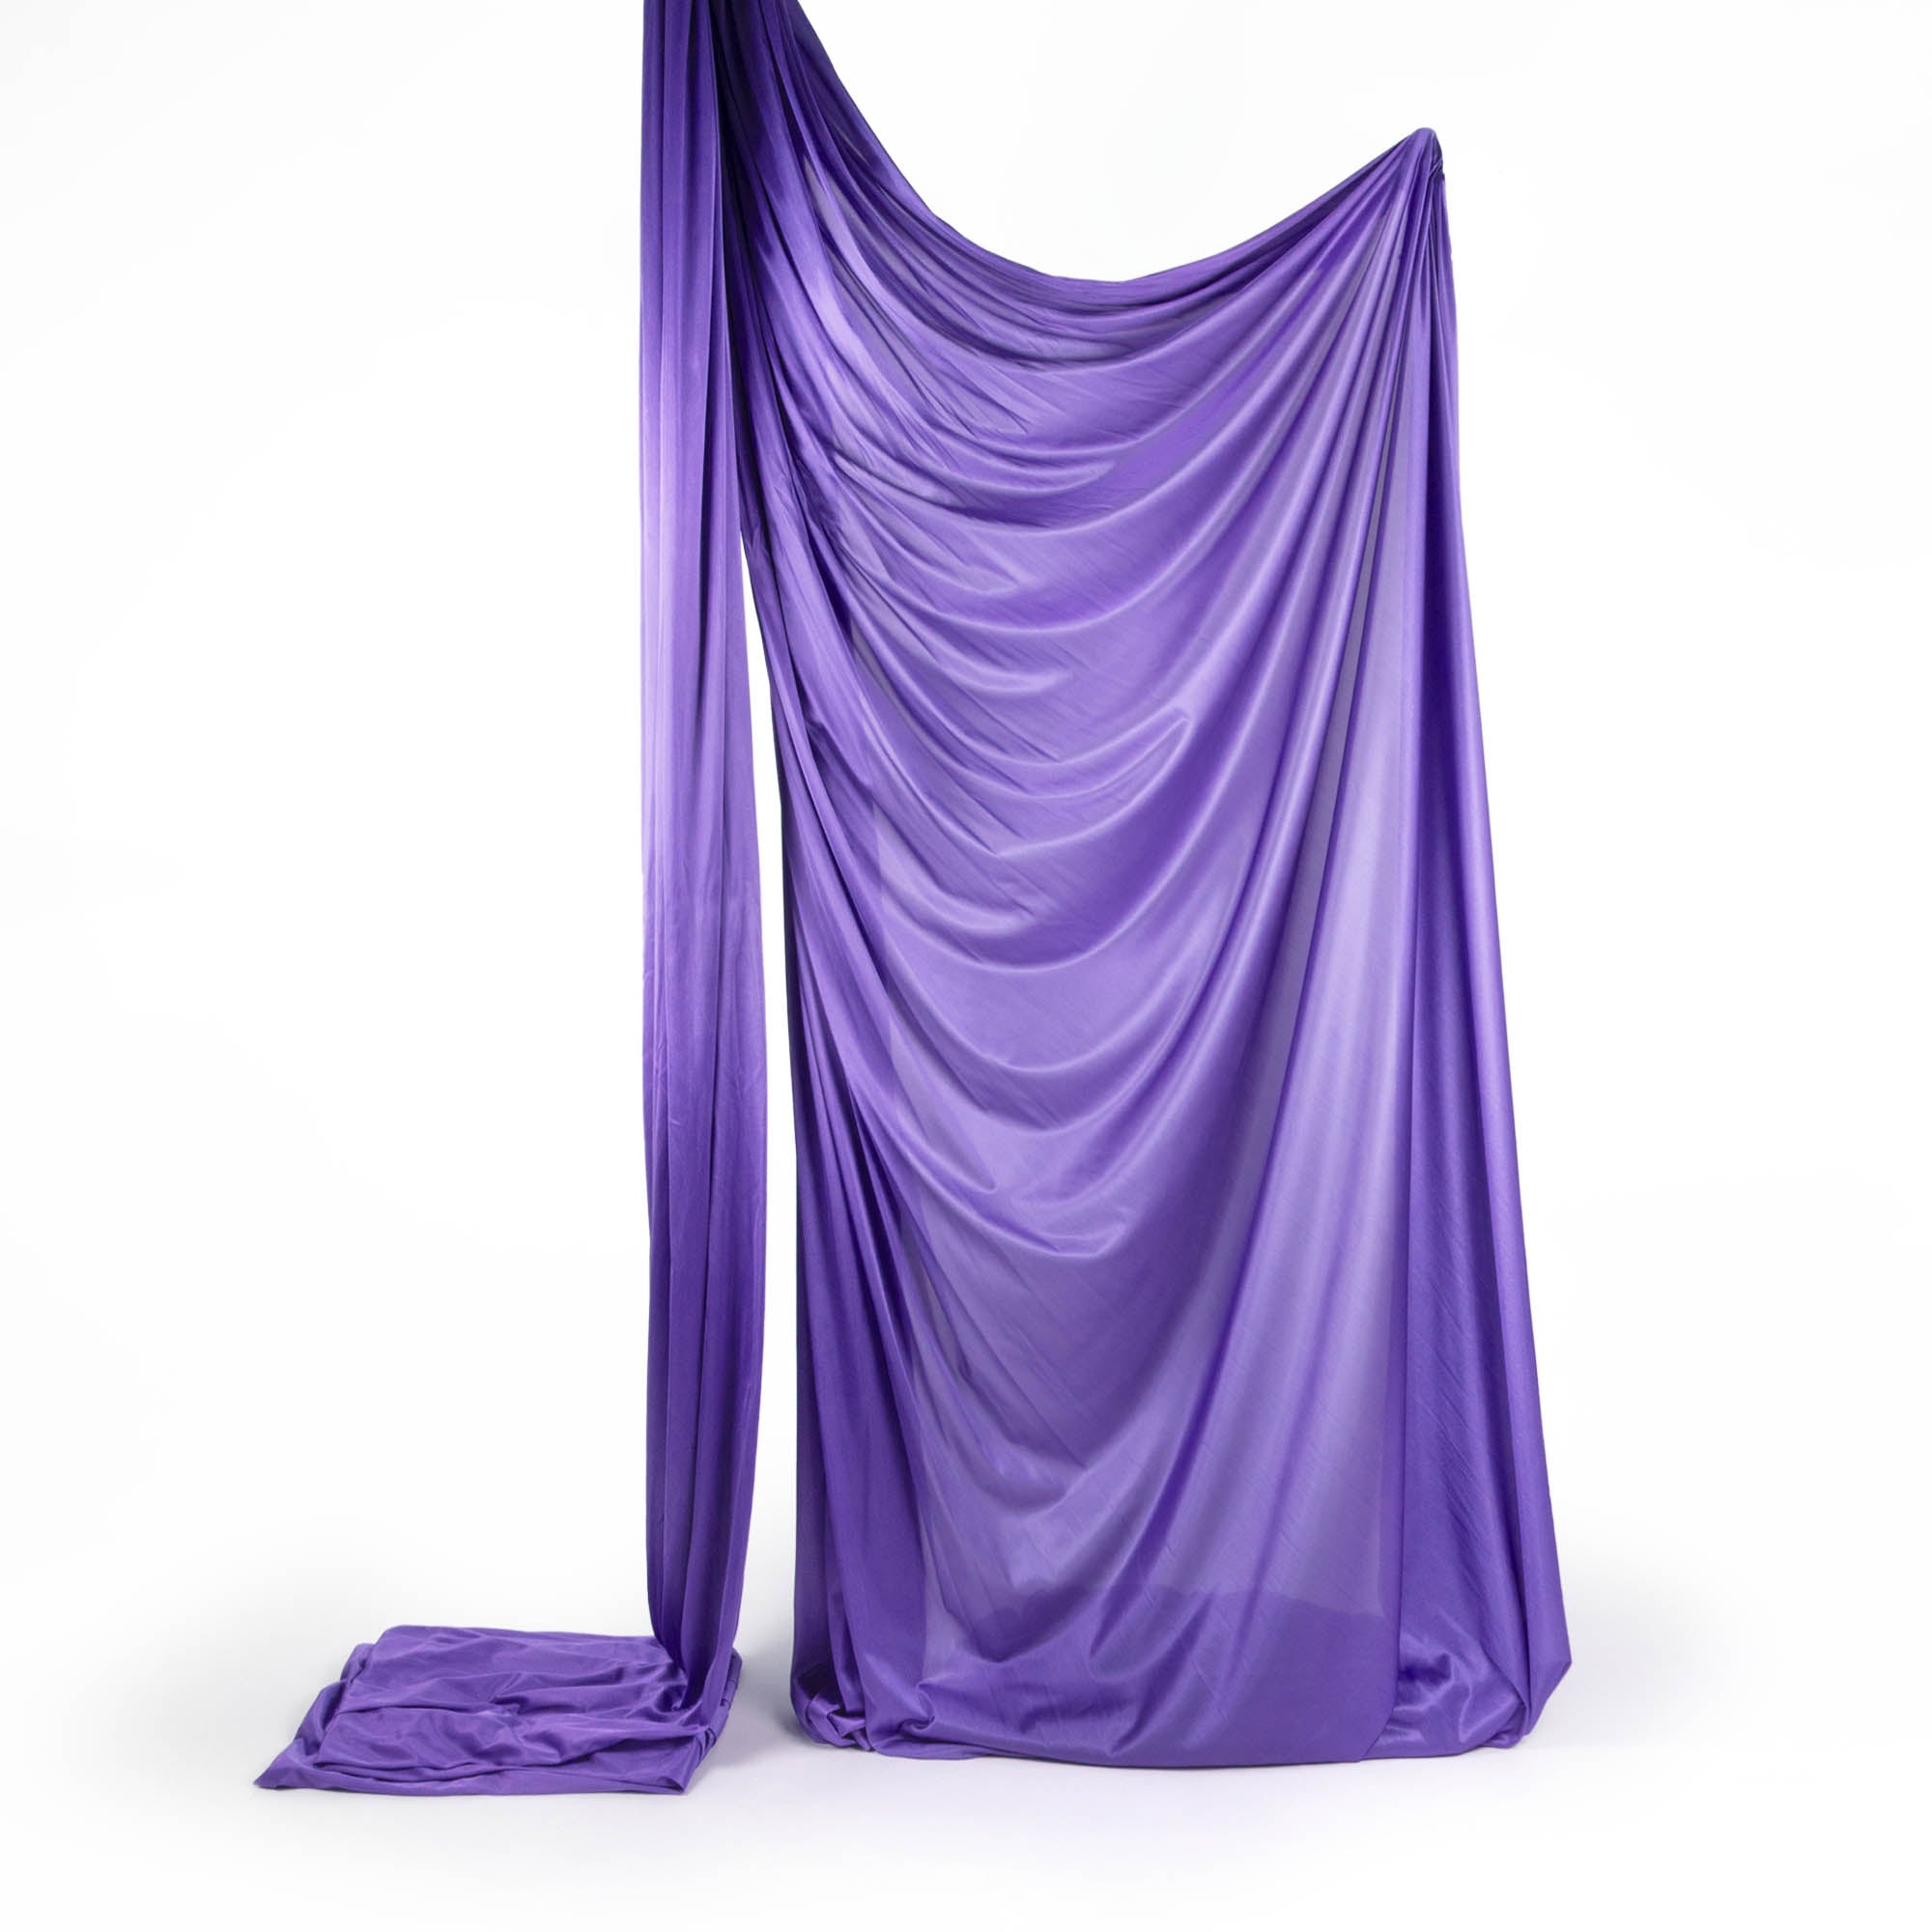 Purple rigged silk